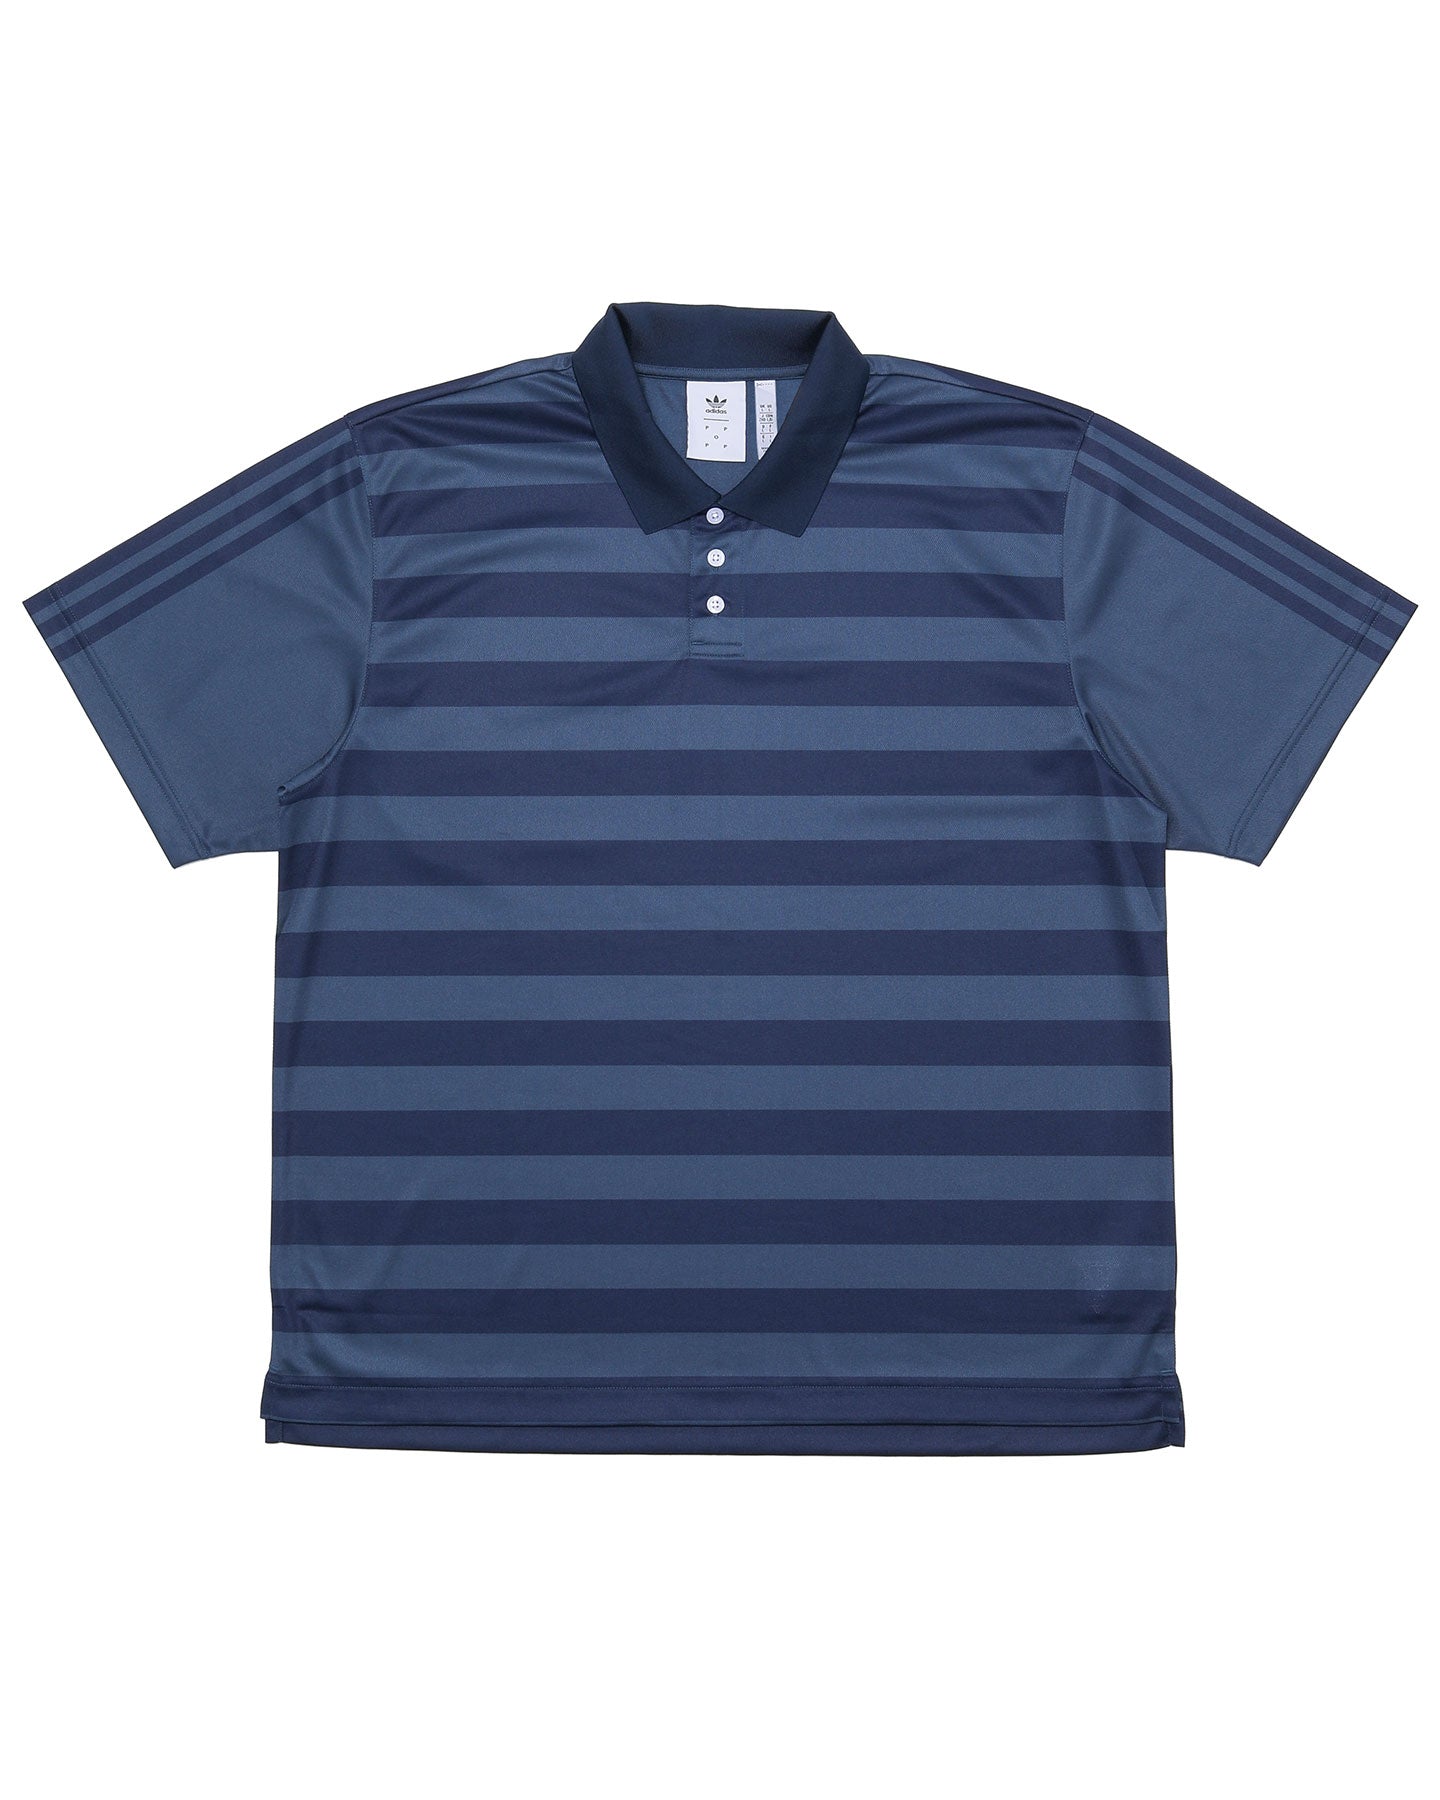 Adidas x POP Trading SS Polo Shirt - Navy